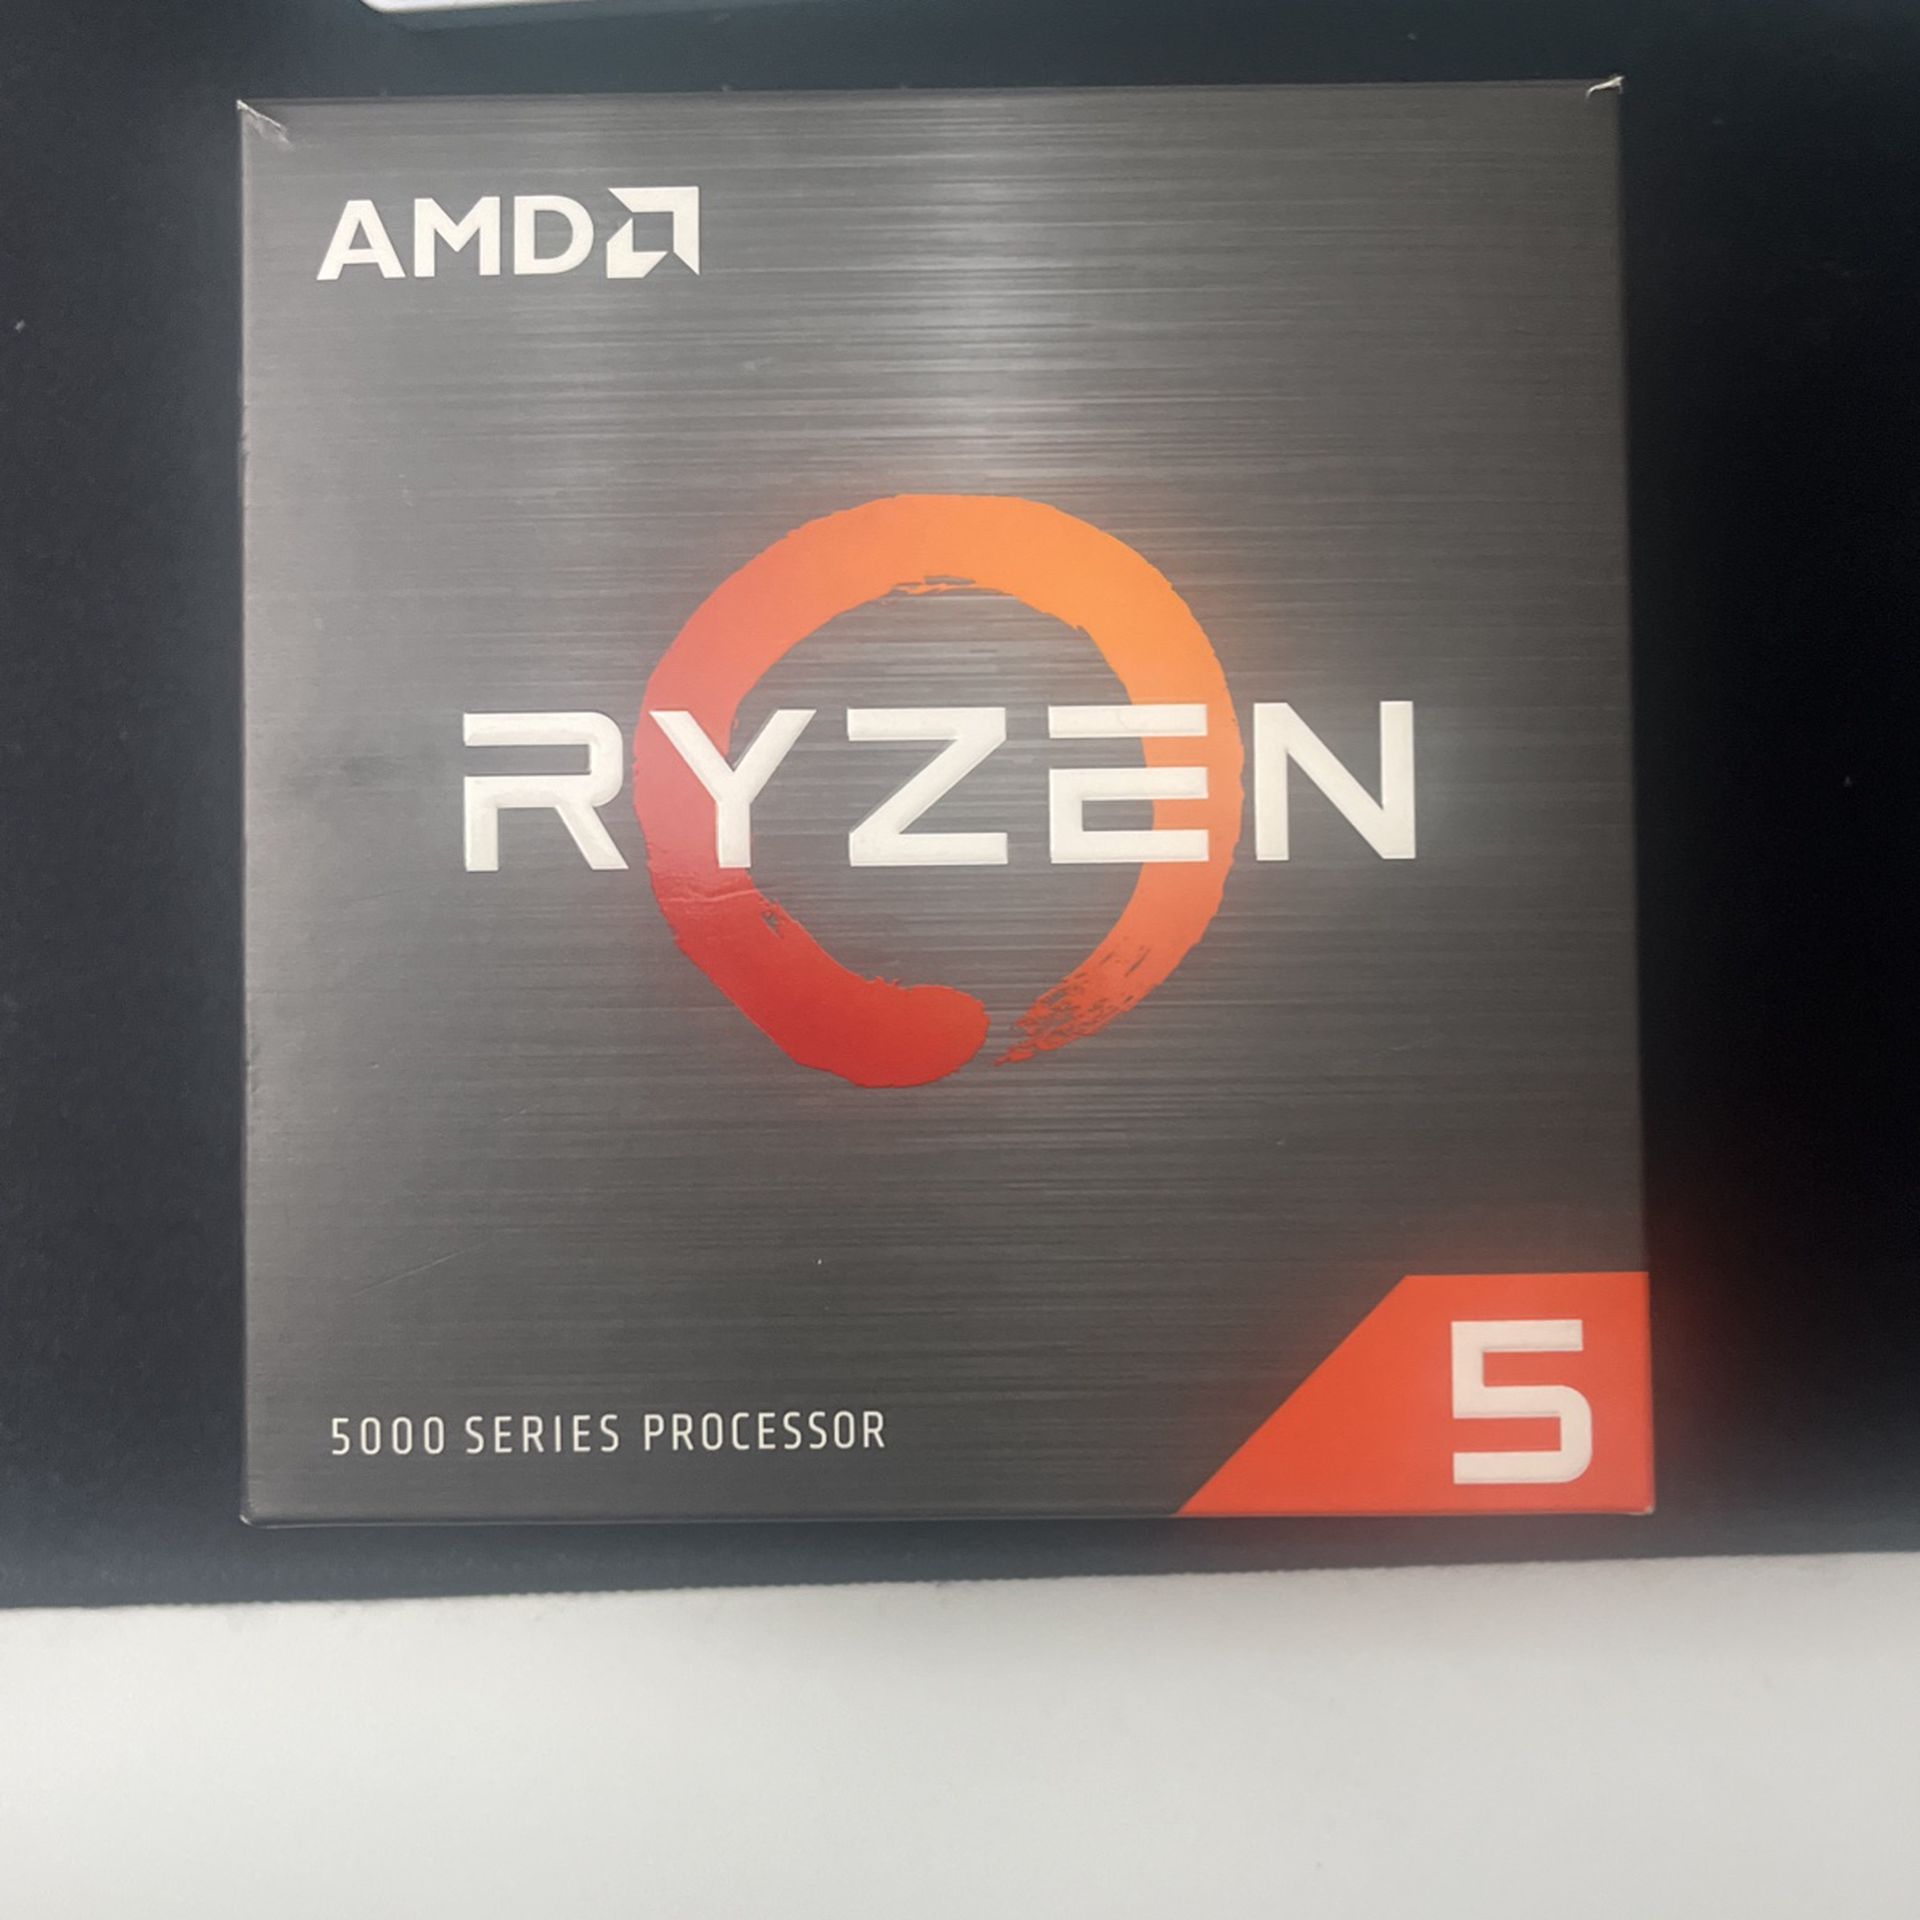 Ryzen 5 5600x AM4 CPU With Stealth Cooler